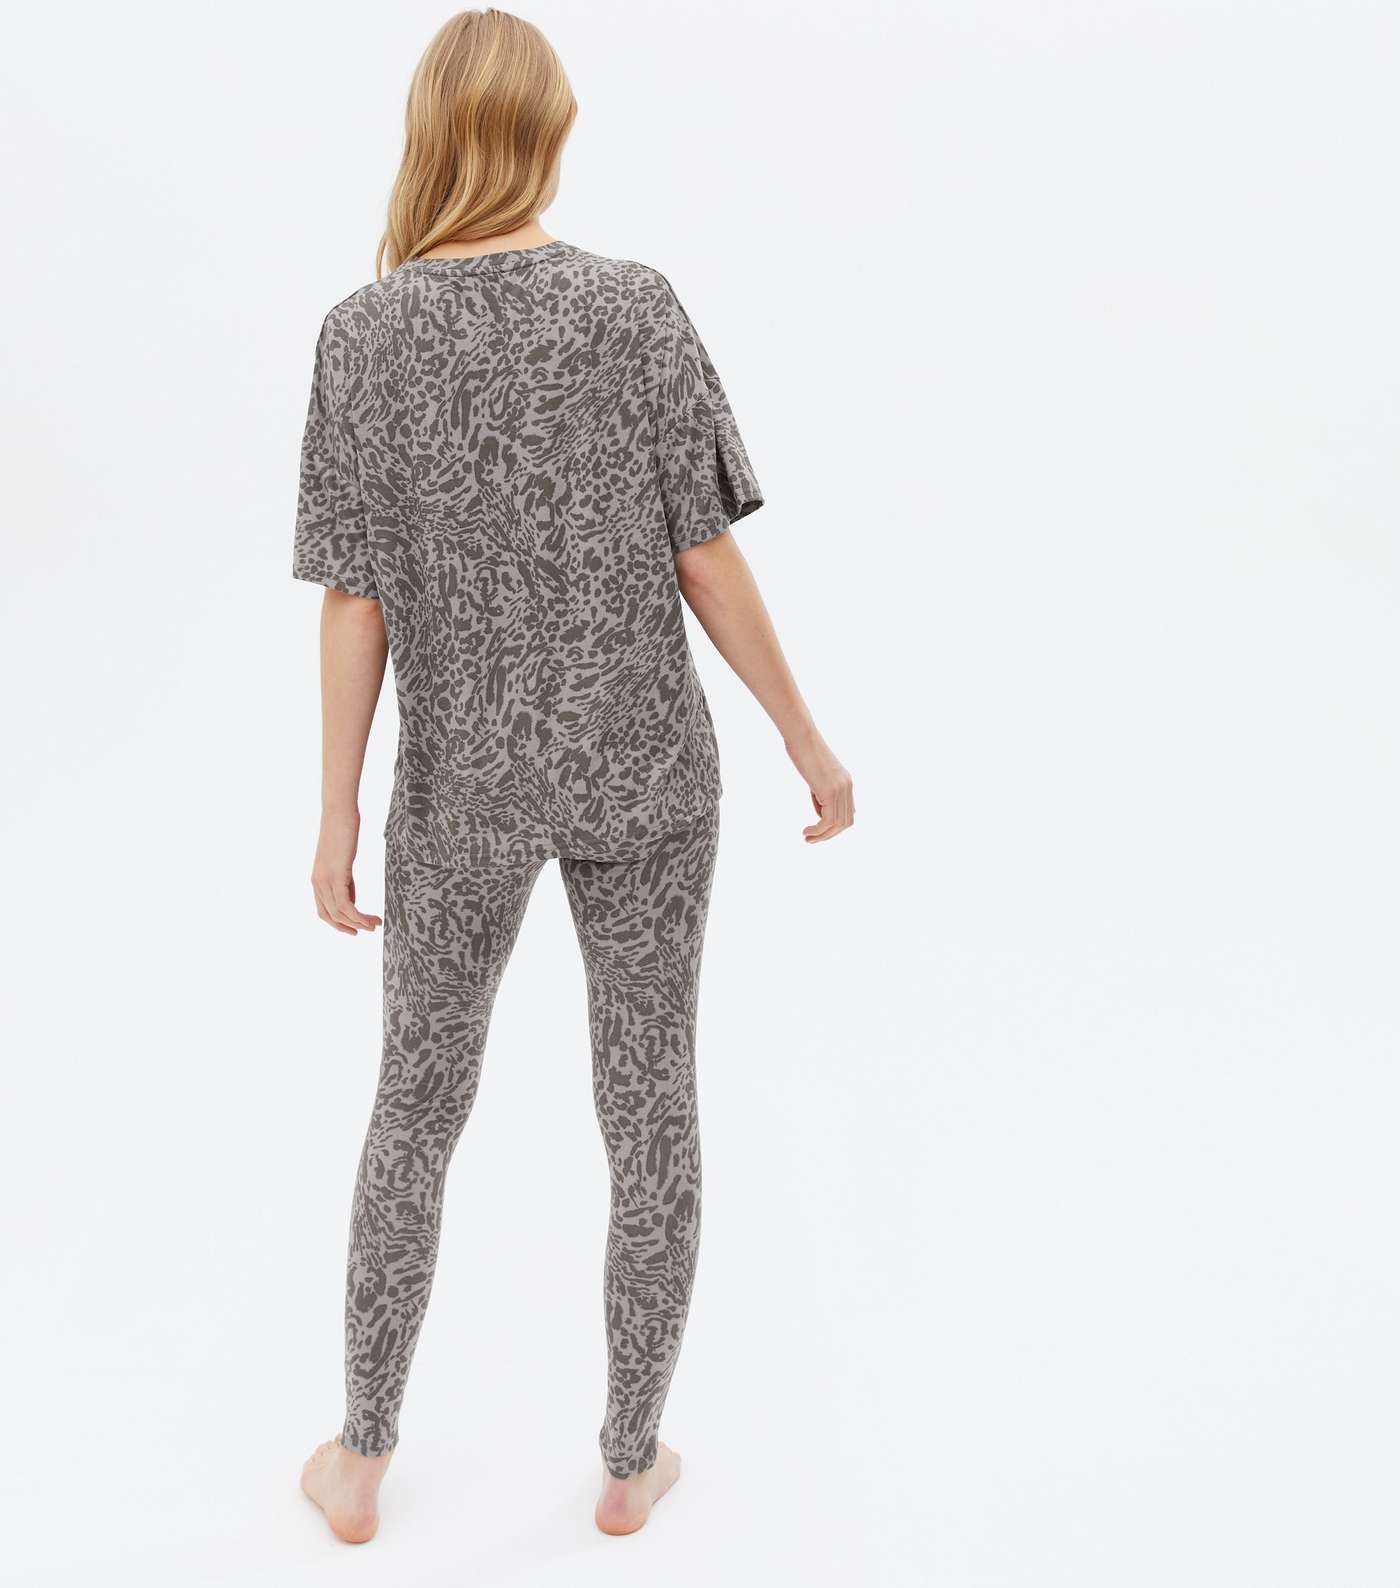 Grey Soft Touch Legging Pyjama Set with Animal Print Image 4